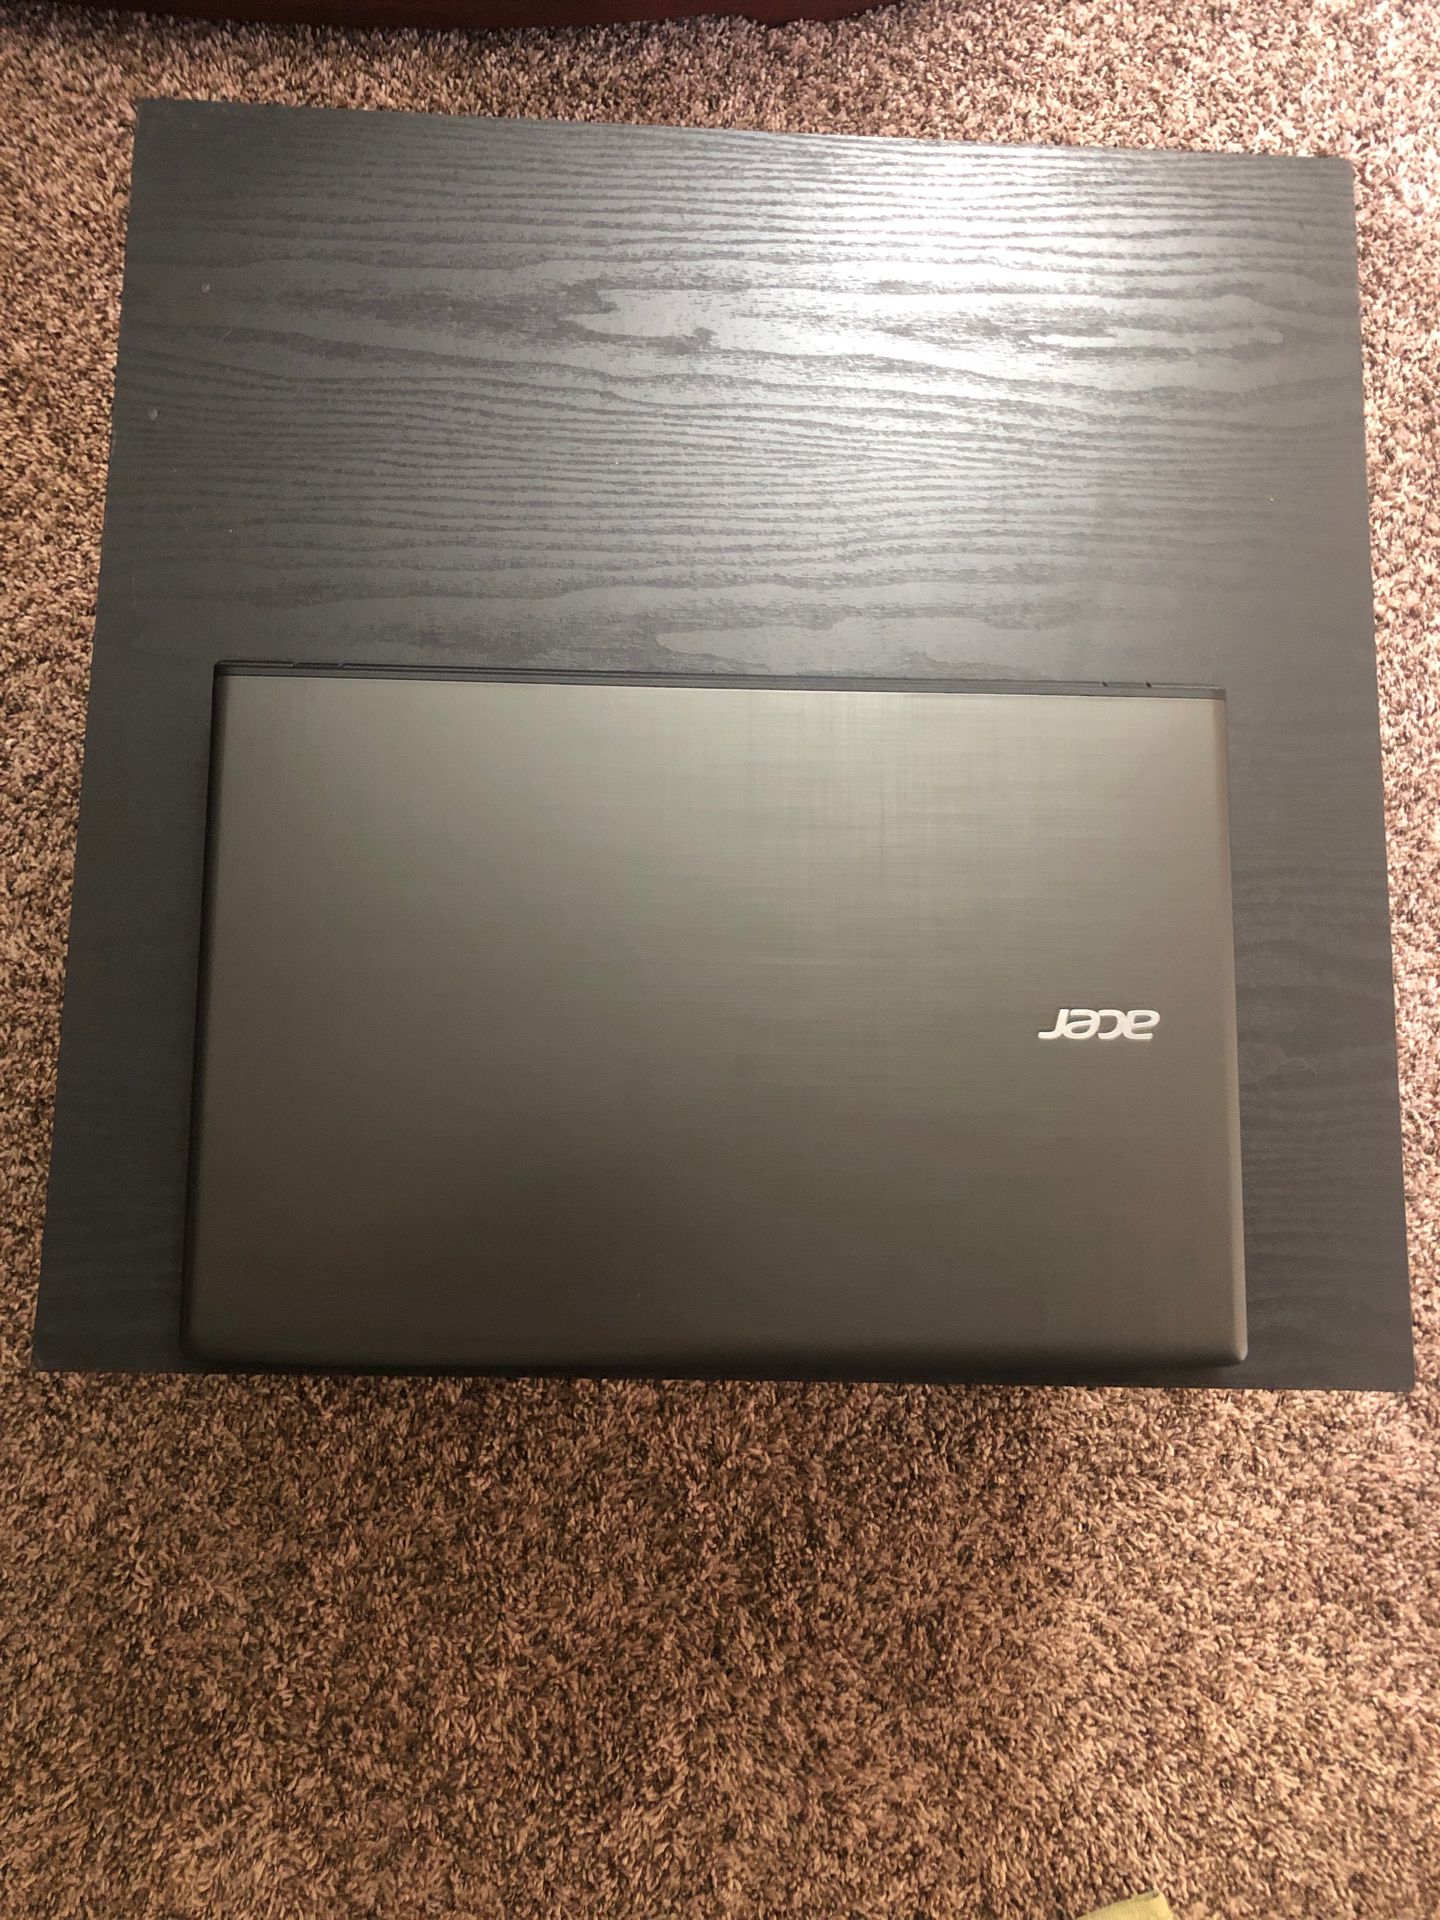 Acer aspire E15 intel core i5 15.6” laptop